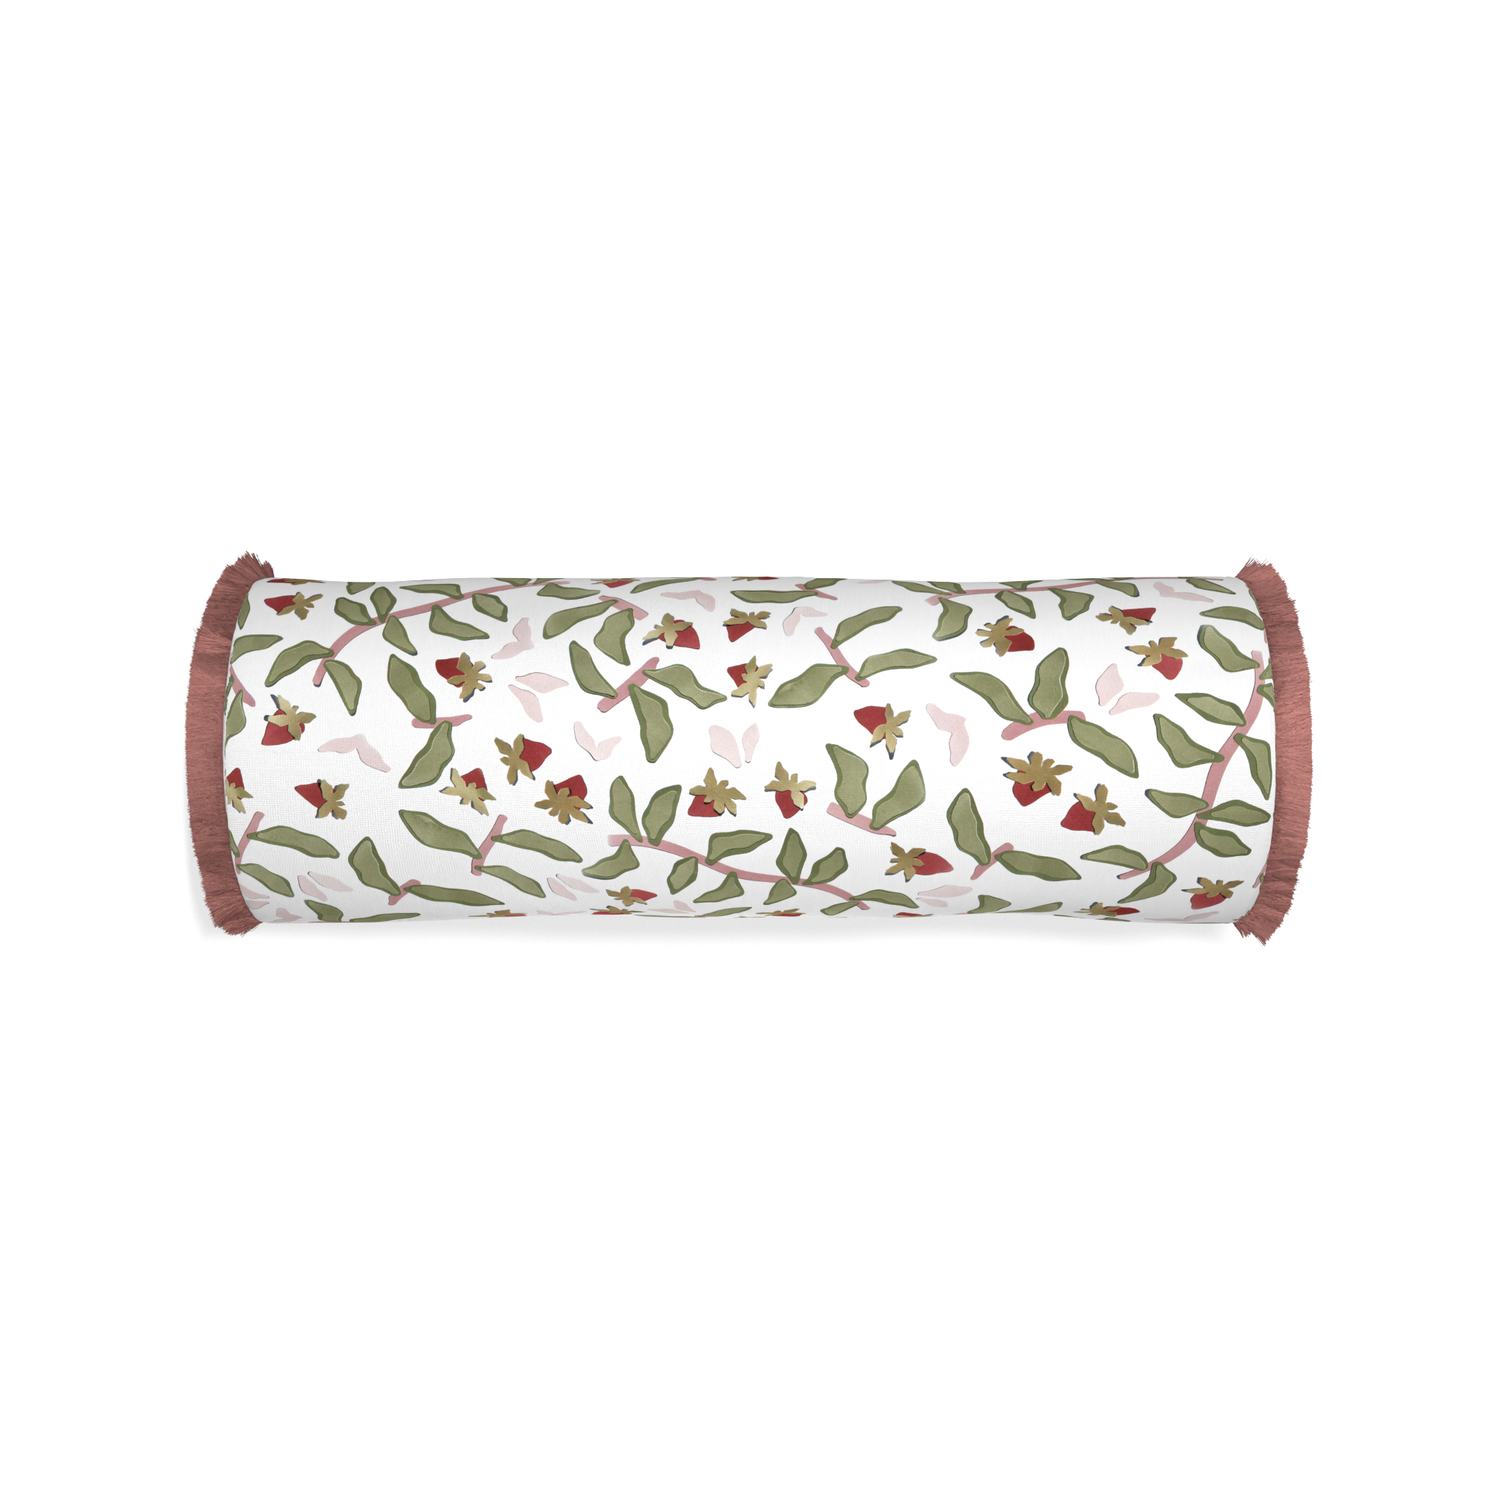 Bolster nellie custom strawberry & botanicalpillow with d fringe on white background